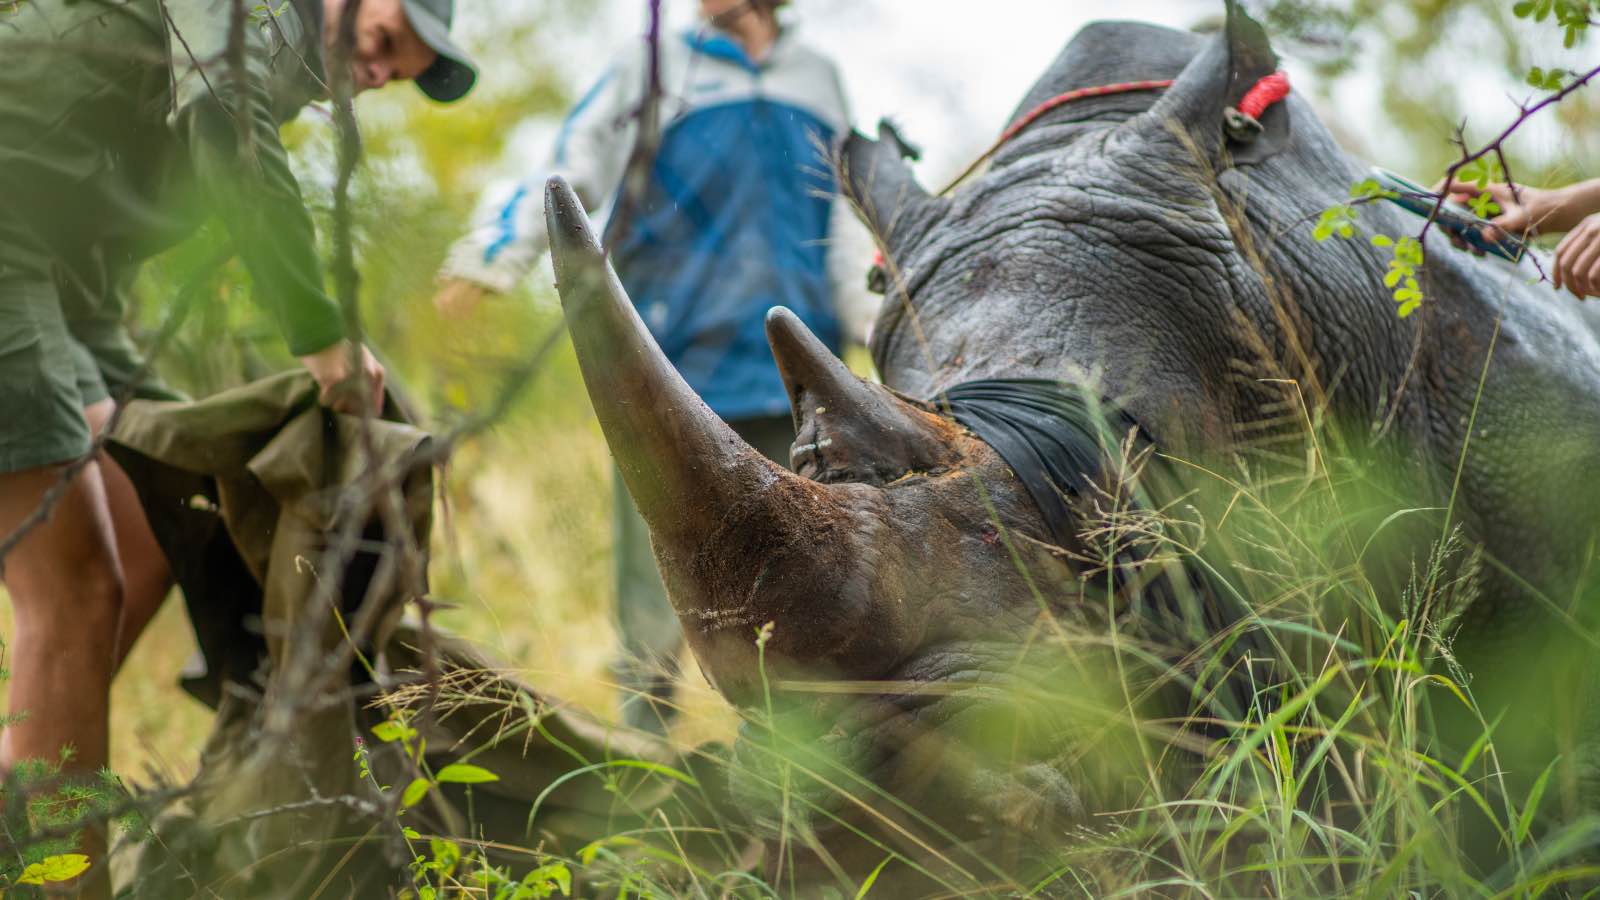 Balule rhino dehorning operation by Kevin MacLaughlin1